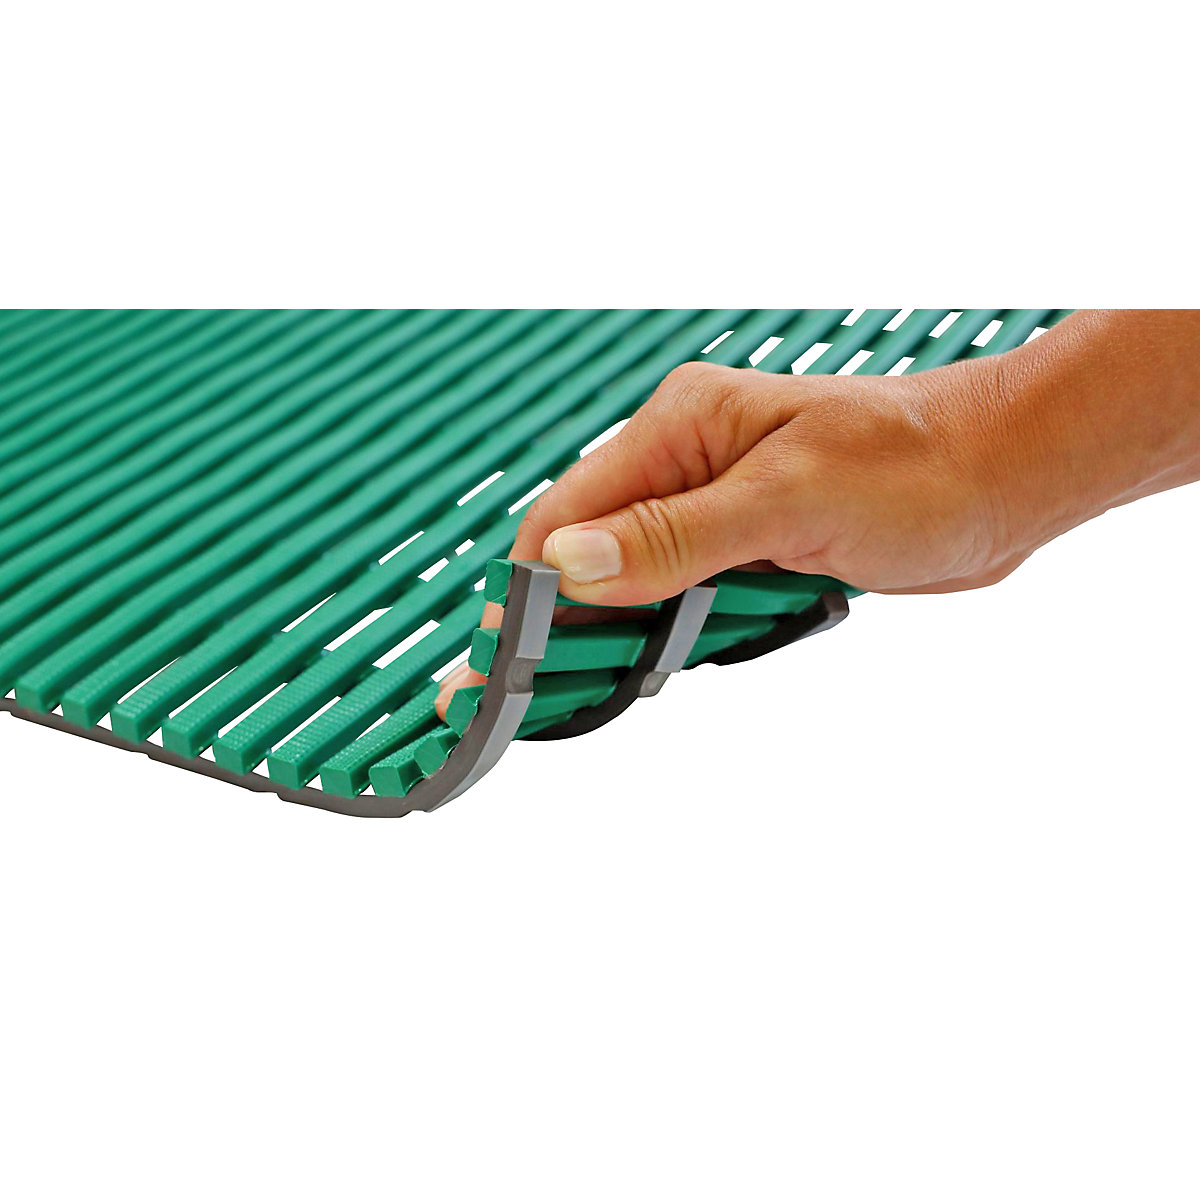 Wet room mat, anti-bacterial – EHA, per metre, green, width 600 mm-1